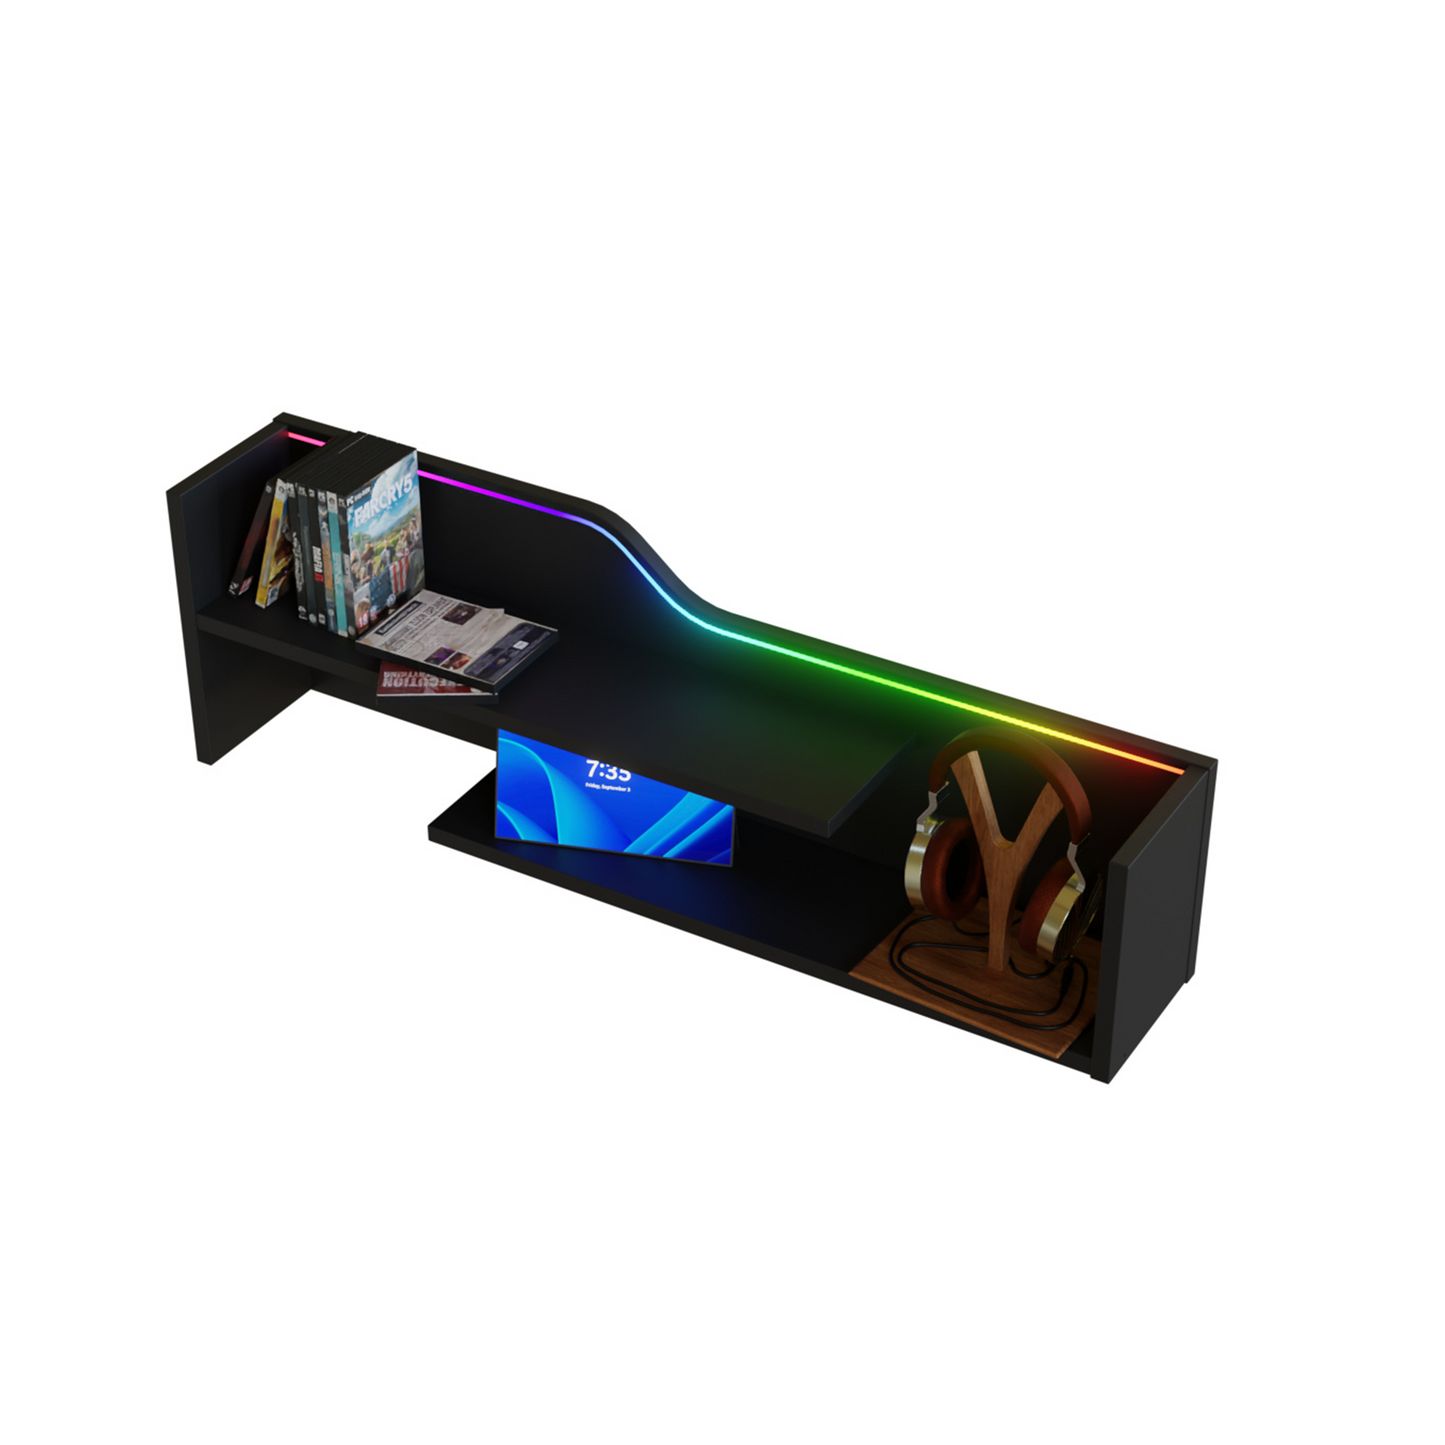 Czarna półka z podświetleniem LED RGB HYPERNOVA01